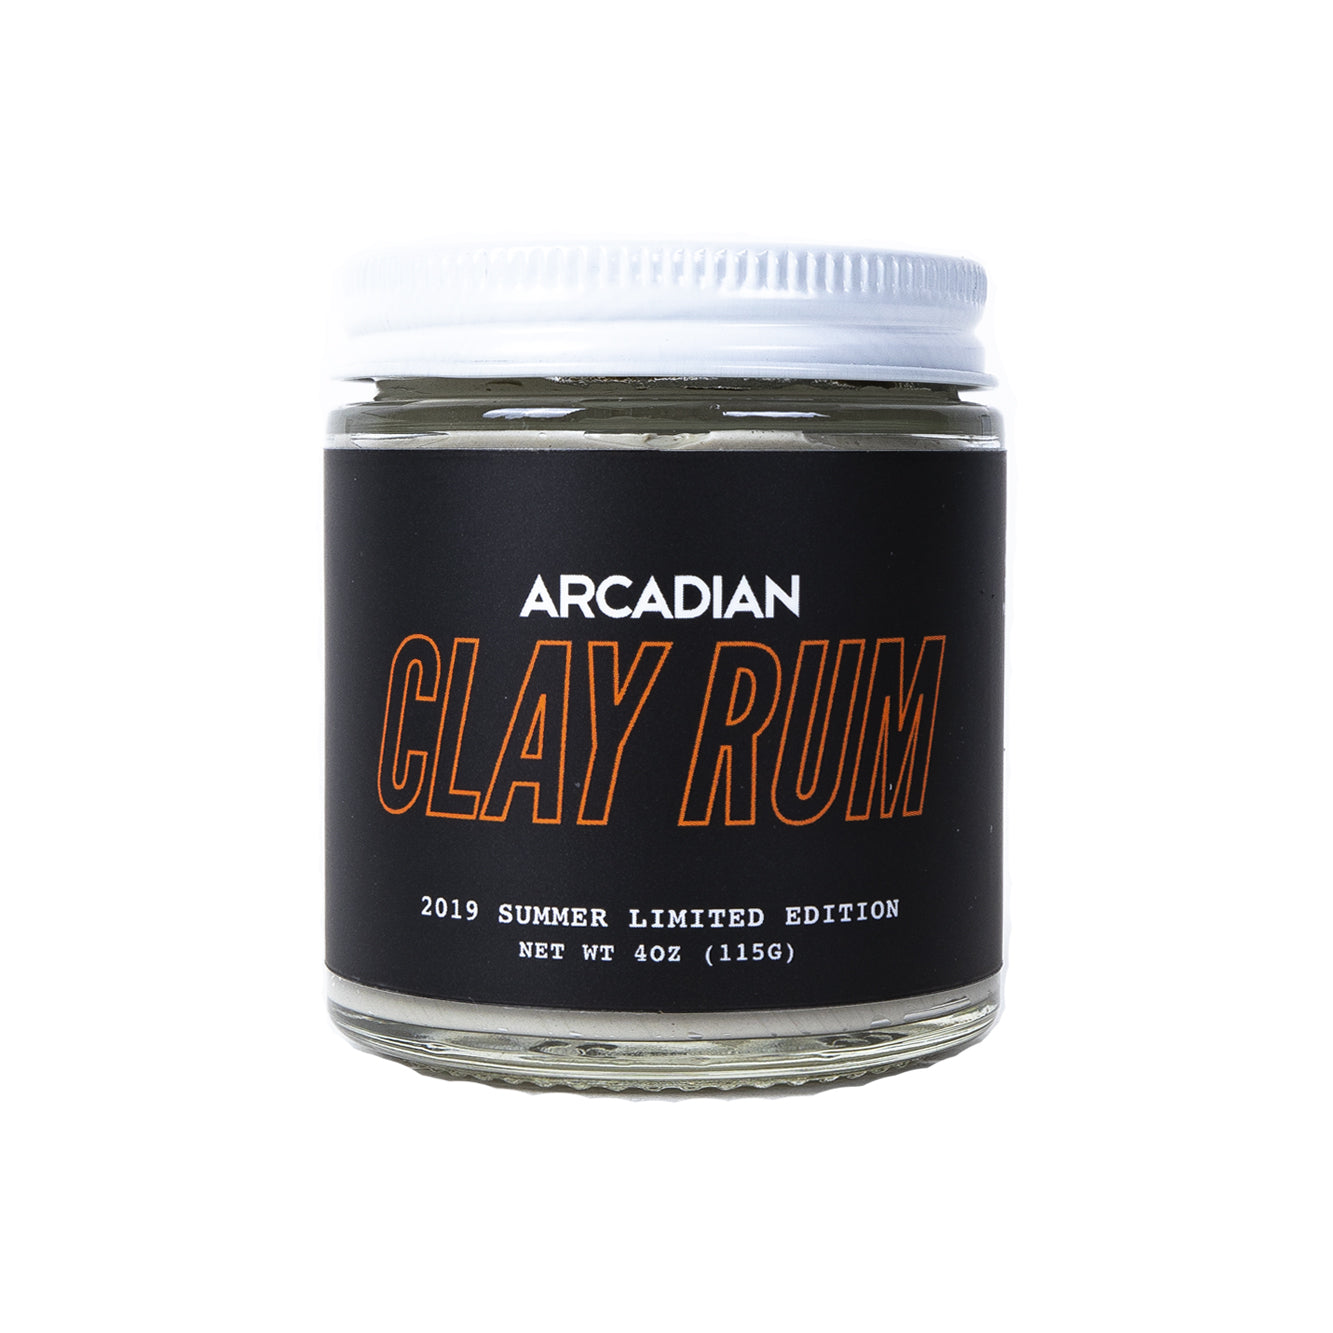 Clay Rum (Limited) - Arcadian Grooming: Pomade, Beard Care, Men's Grooming Supplies